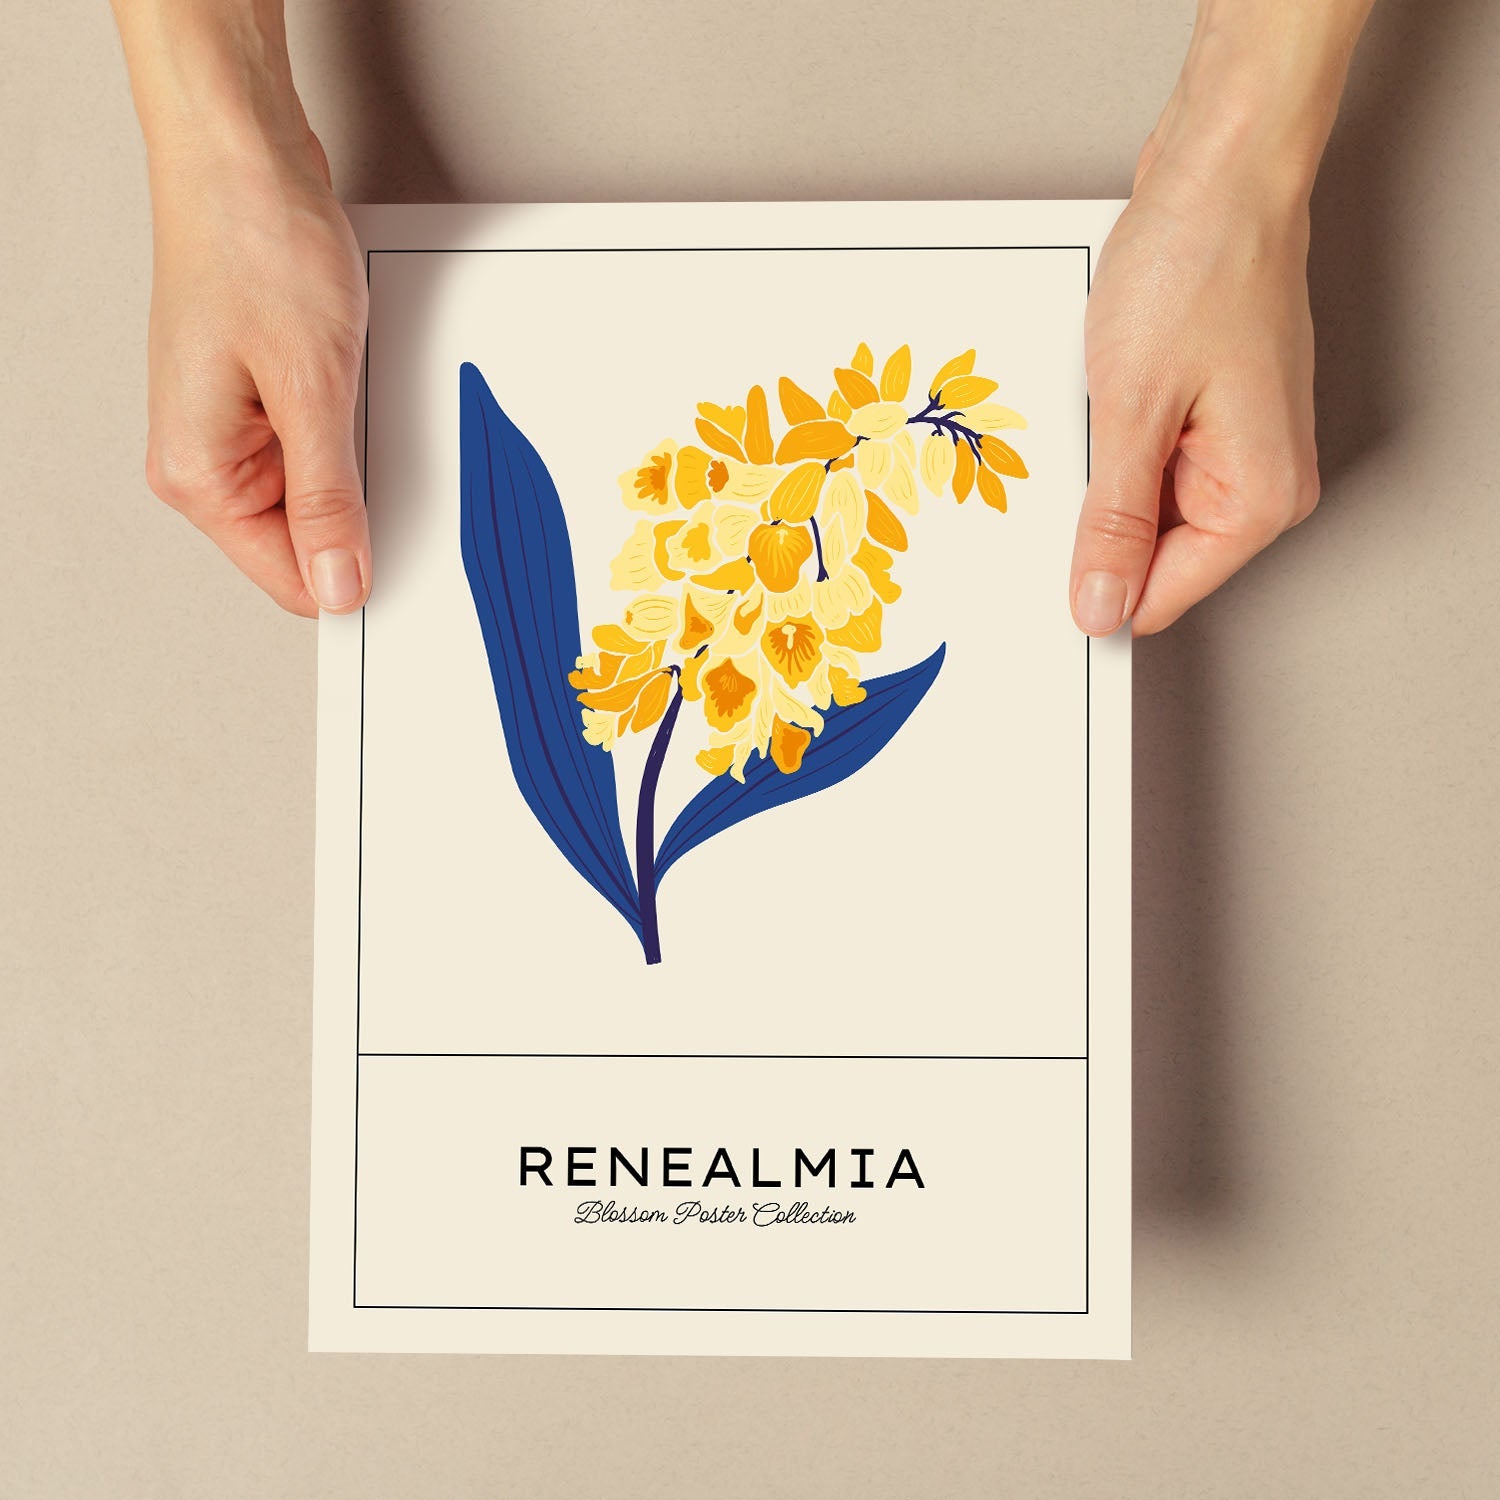 Renealmia-Artwork-Nacnic-Nacnic Estudio SL